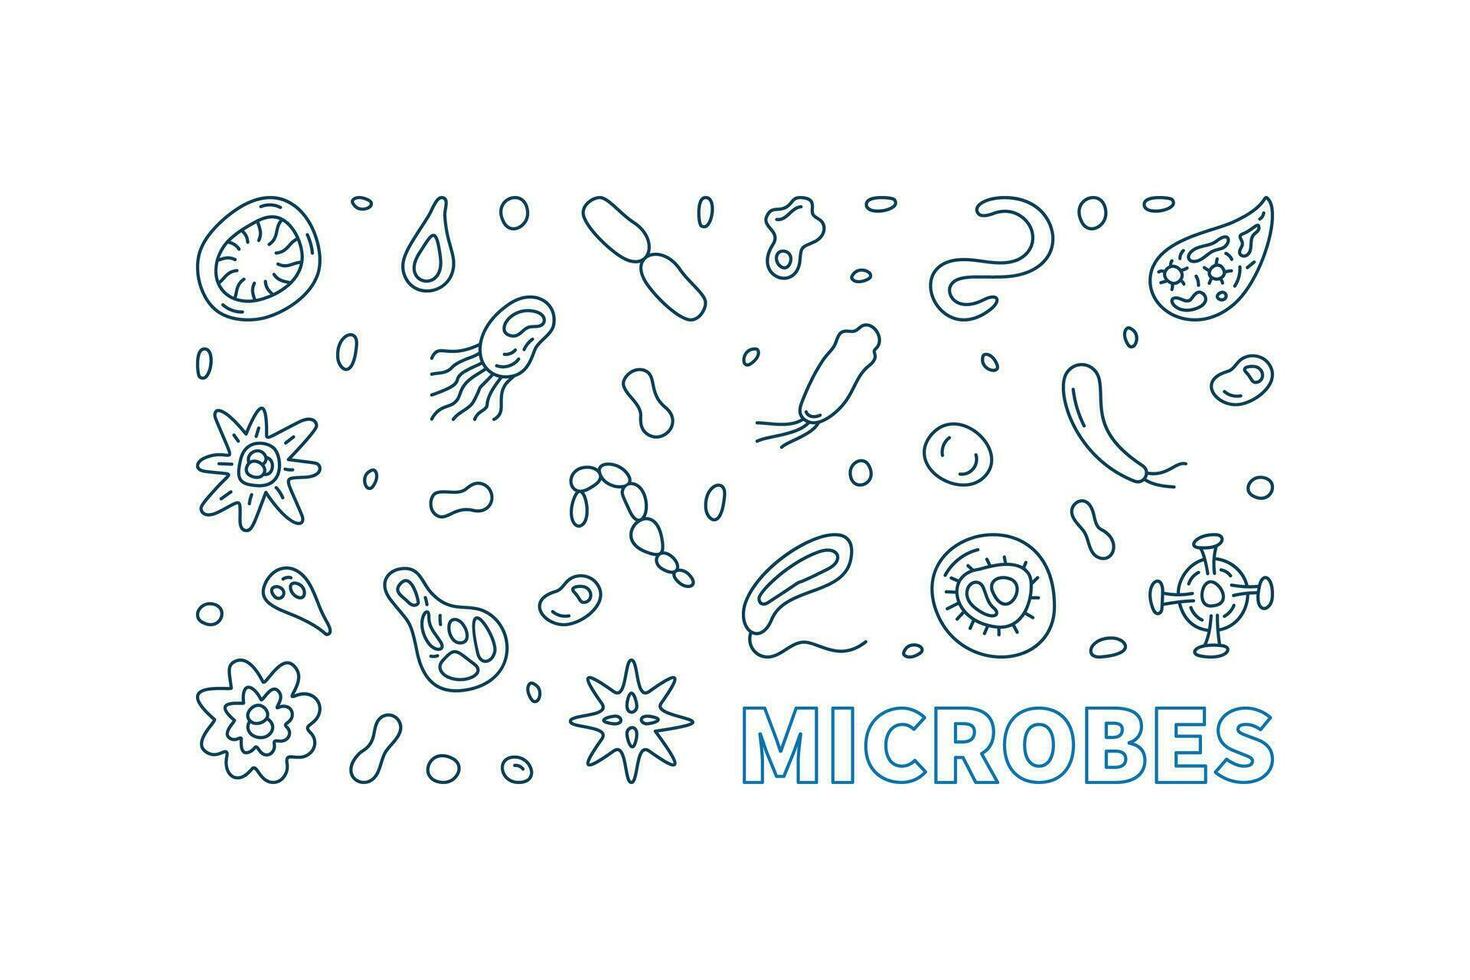 microbios vector micro biología concepto contorno mínimo horizontal bandera o ilustración